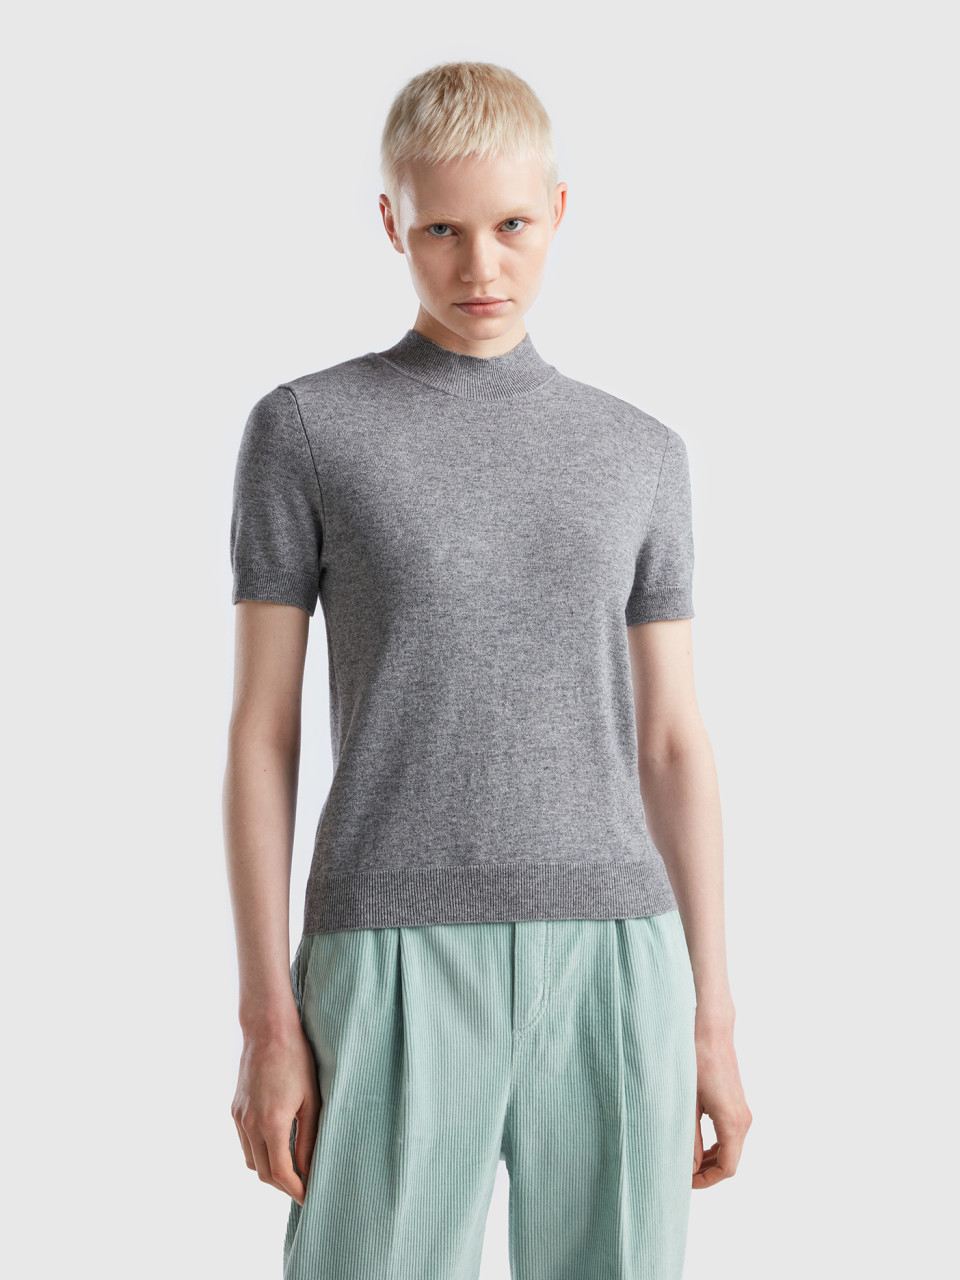 Benetton, Light Gray Short Sleeve Sweater In Cashmere Blend, Light Gray, Women